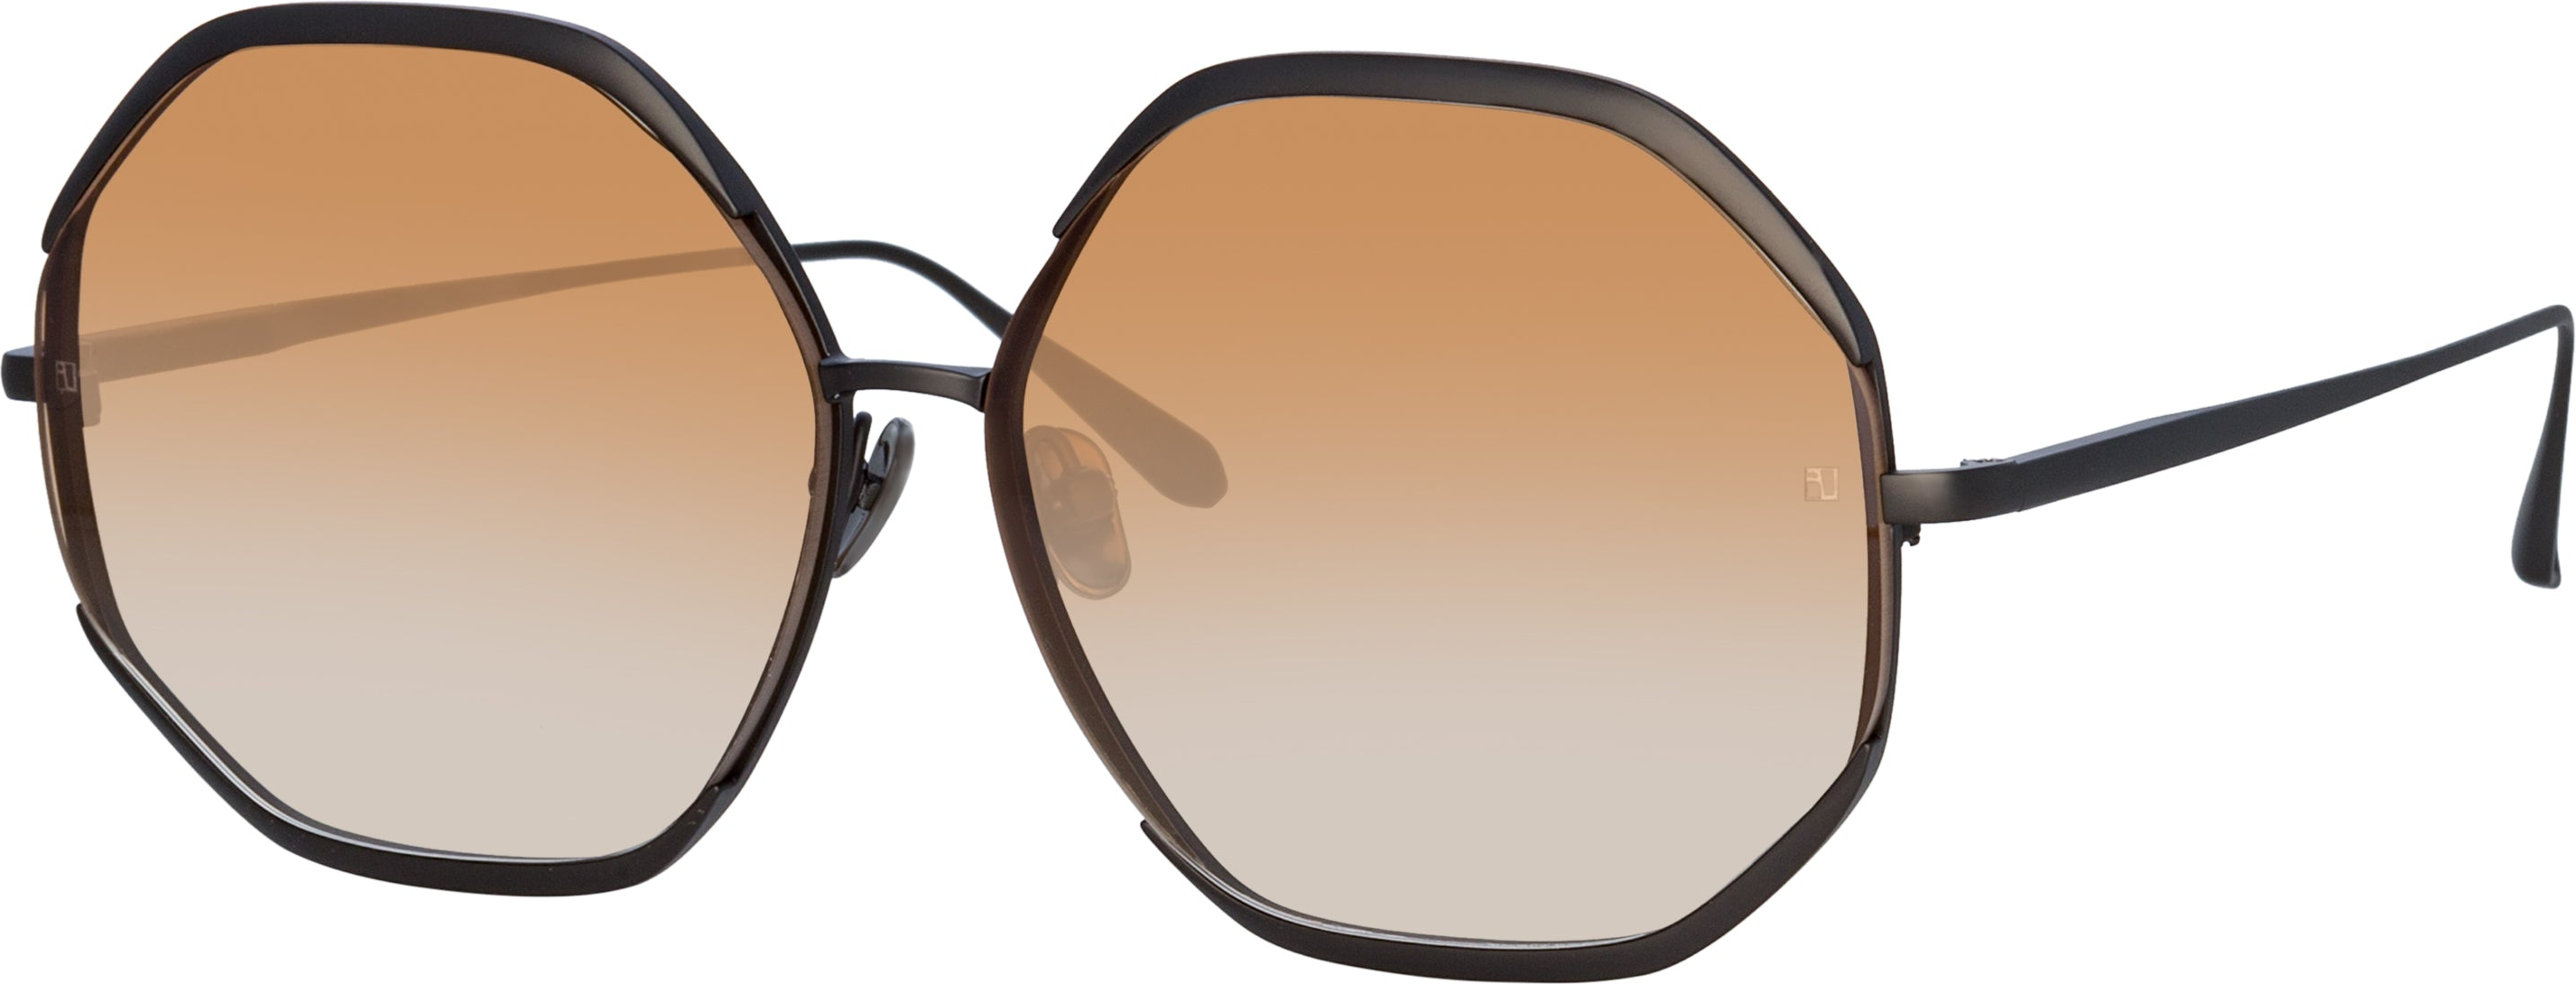 Color_LFL1208C6SUN - Camila Hexagon Sunglasses in Nickel and Camel